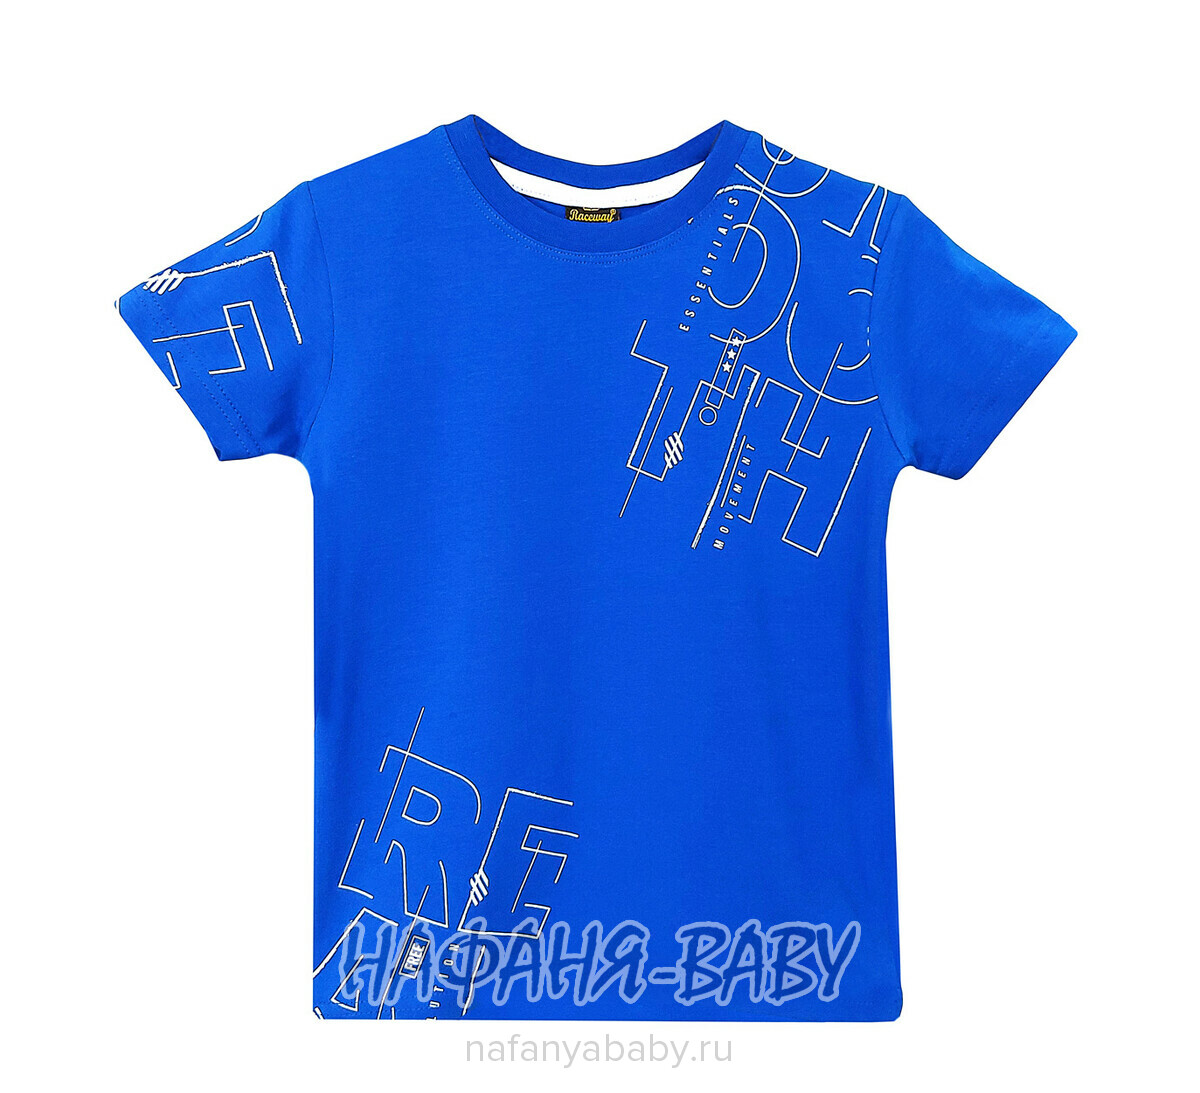 Подростковая футболка RCW арт. 5823, 10-14 лет, цвет синий, оптом Турция